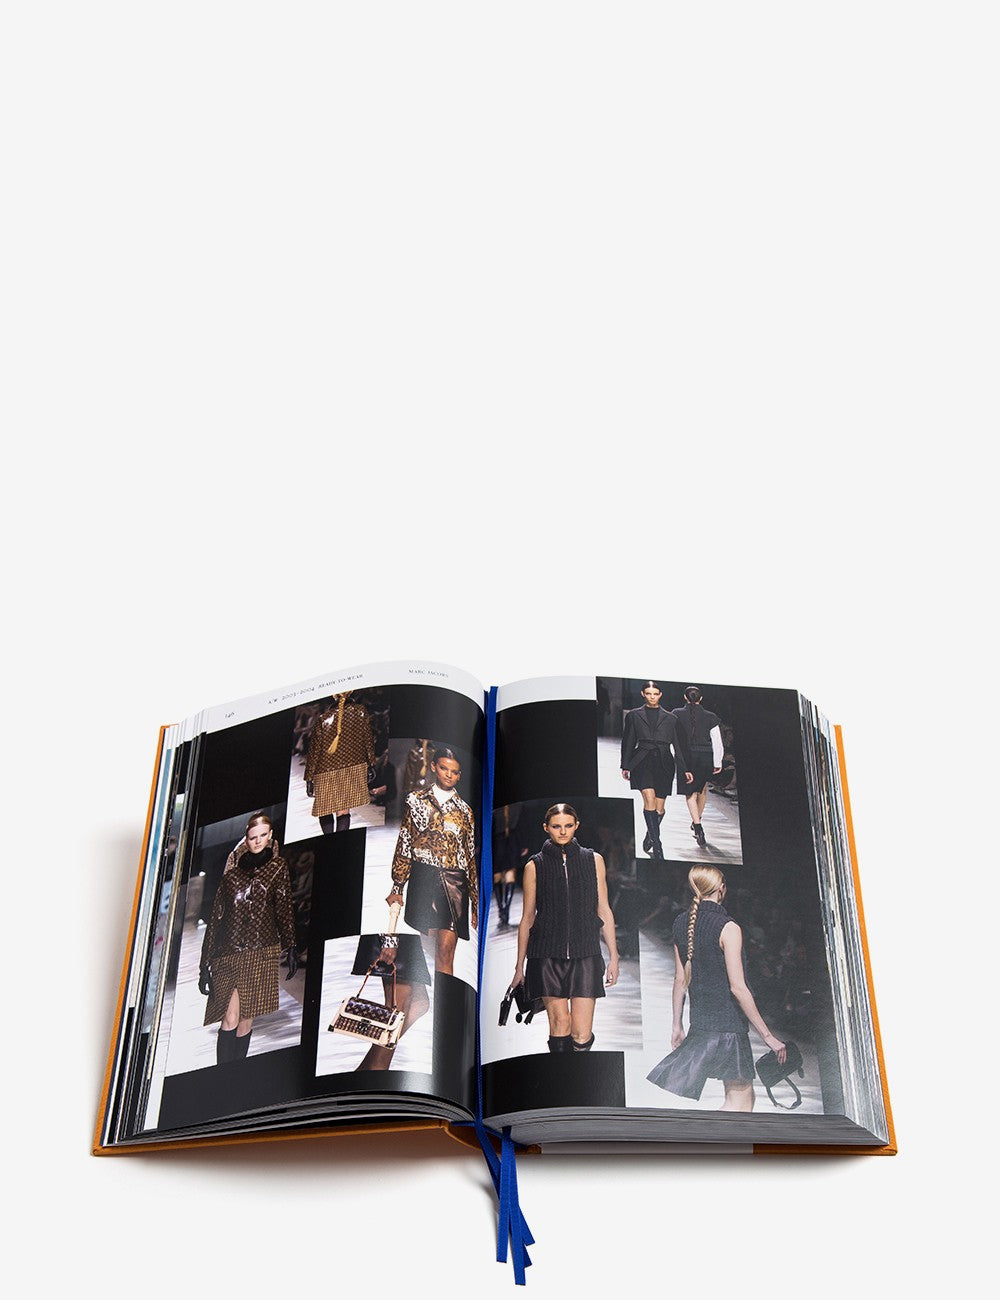 Little Book Of Louis Vuitton – Chic Interiors